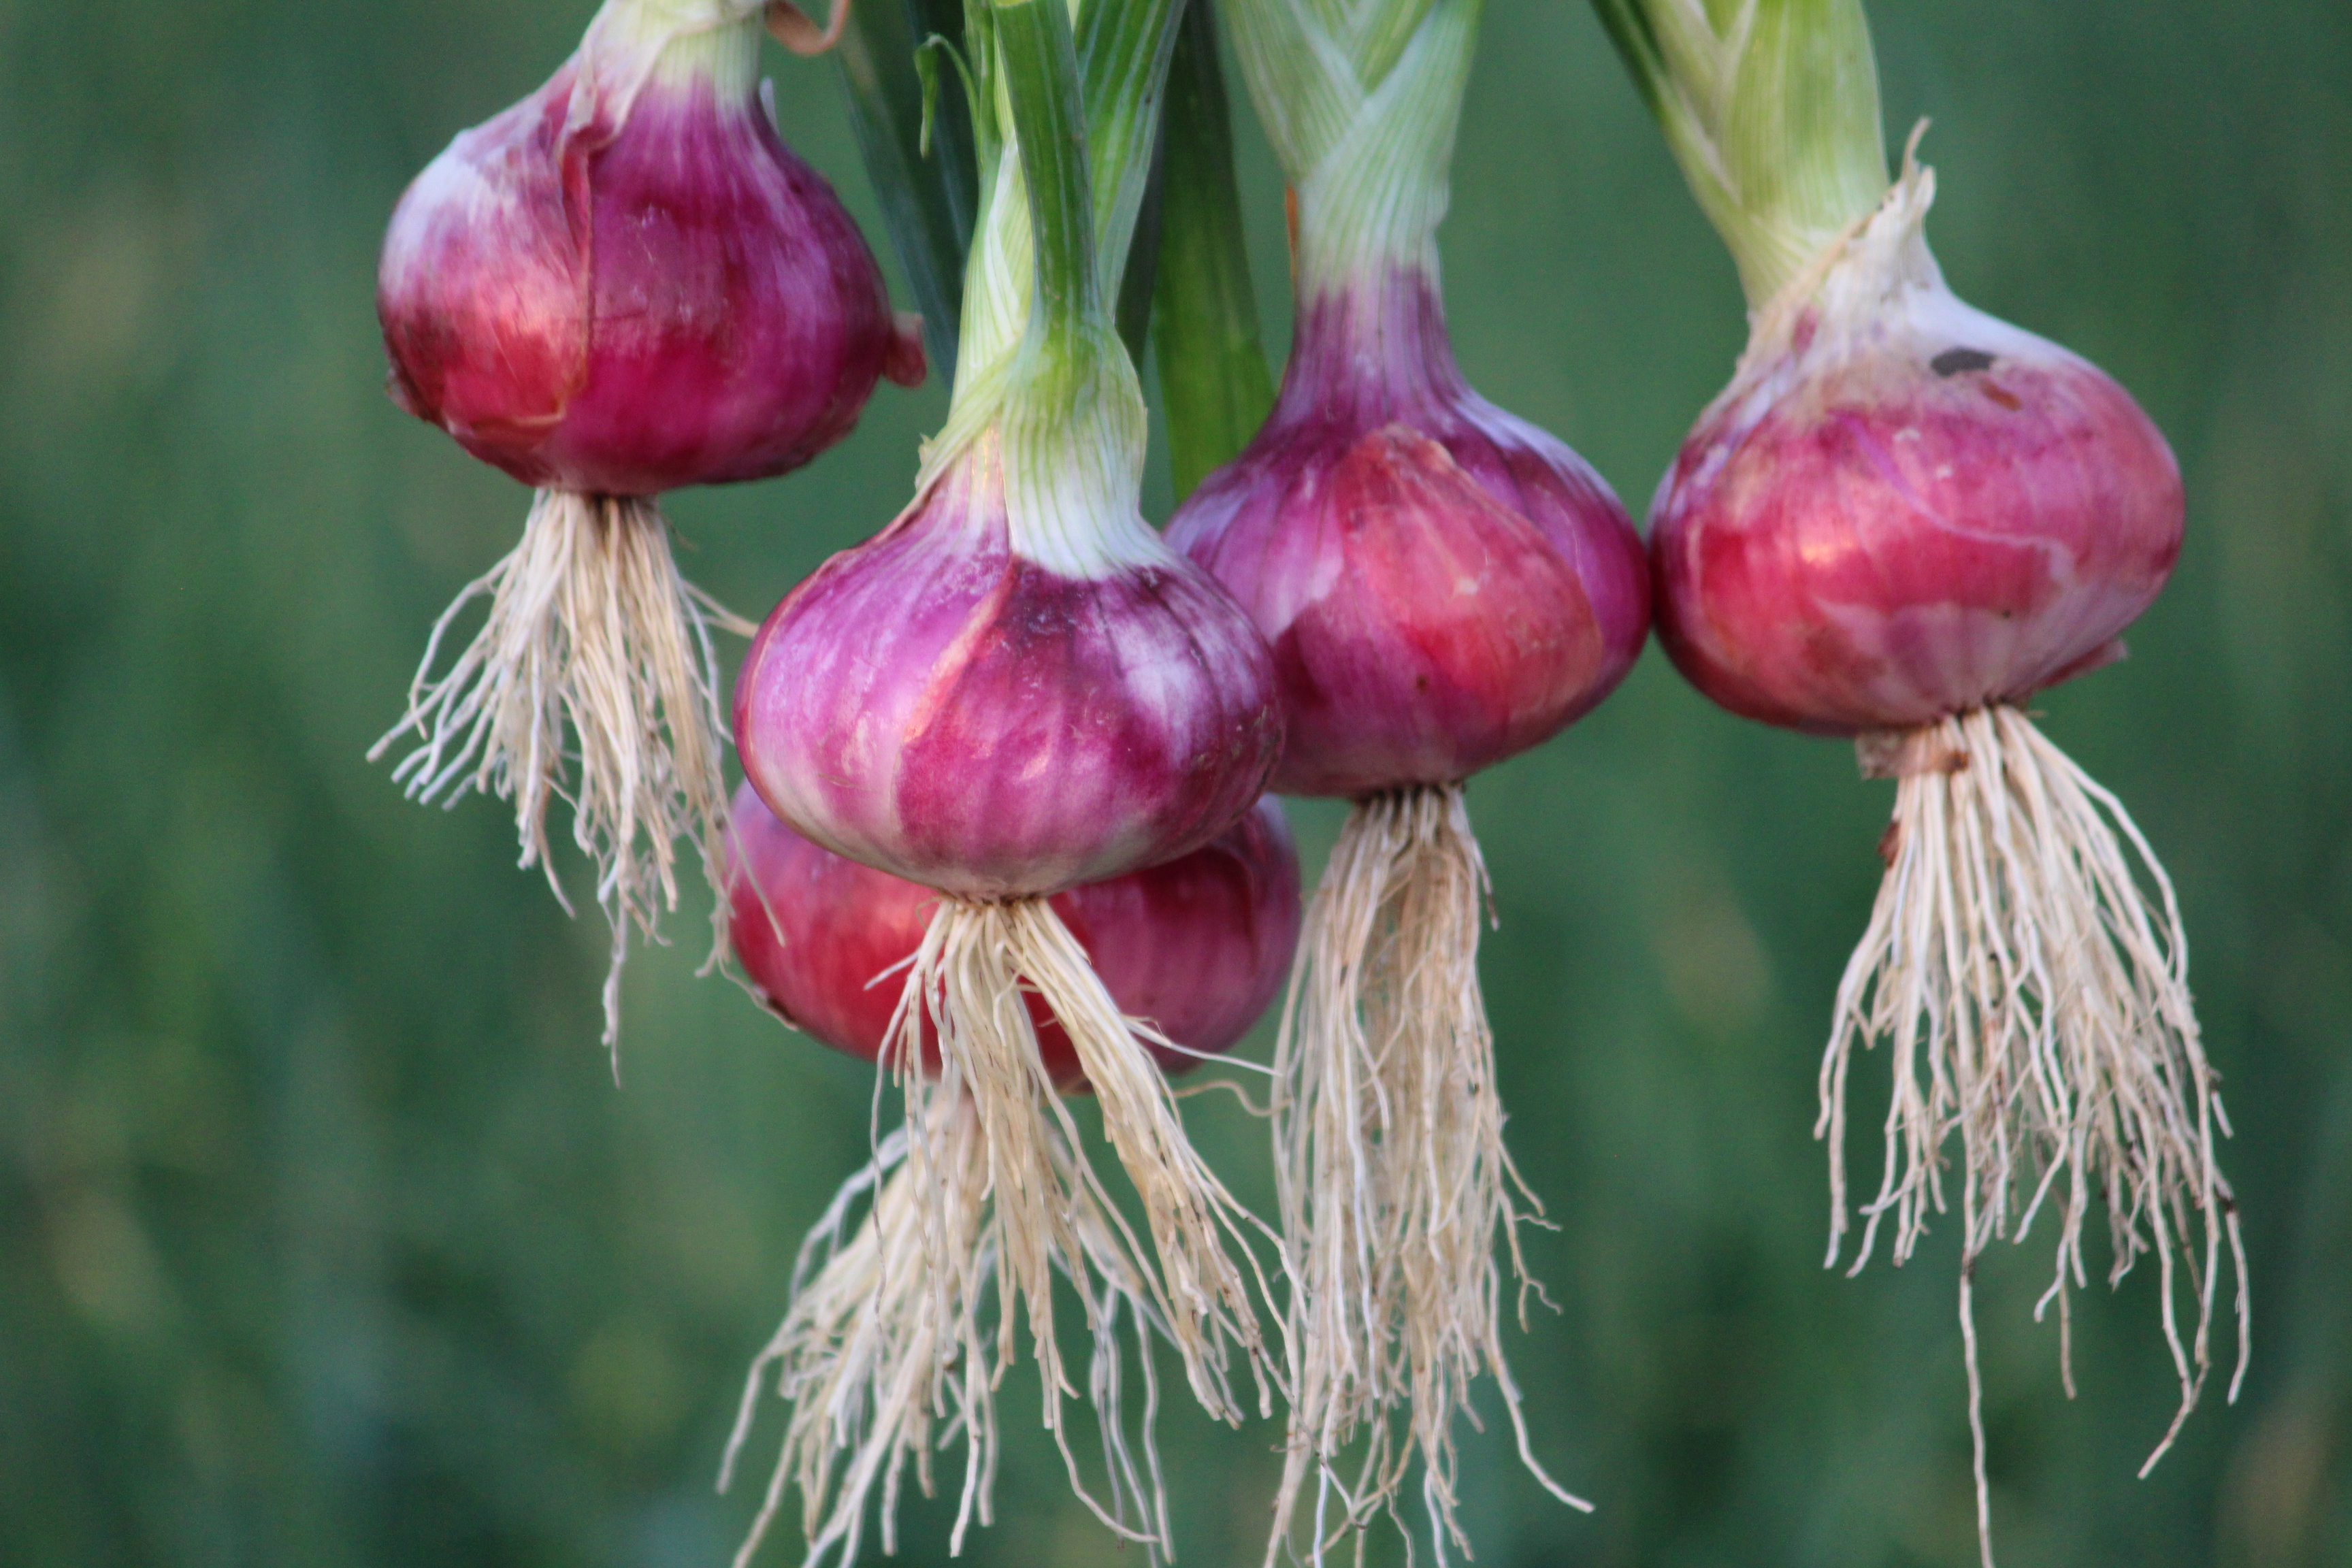 Onion crop nutrition